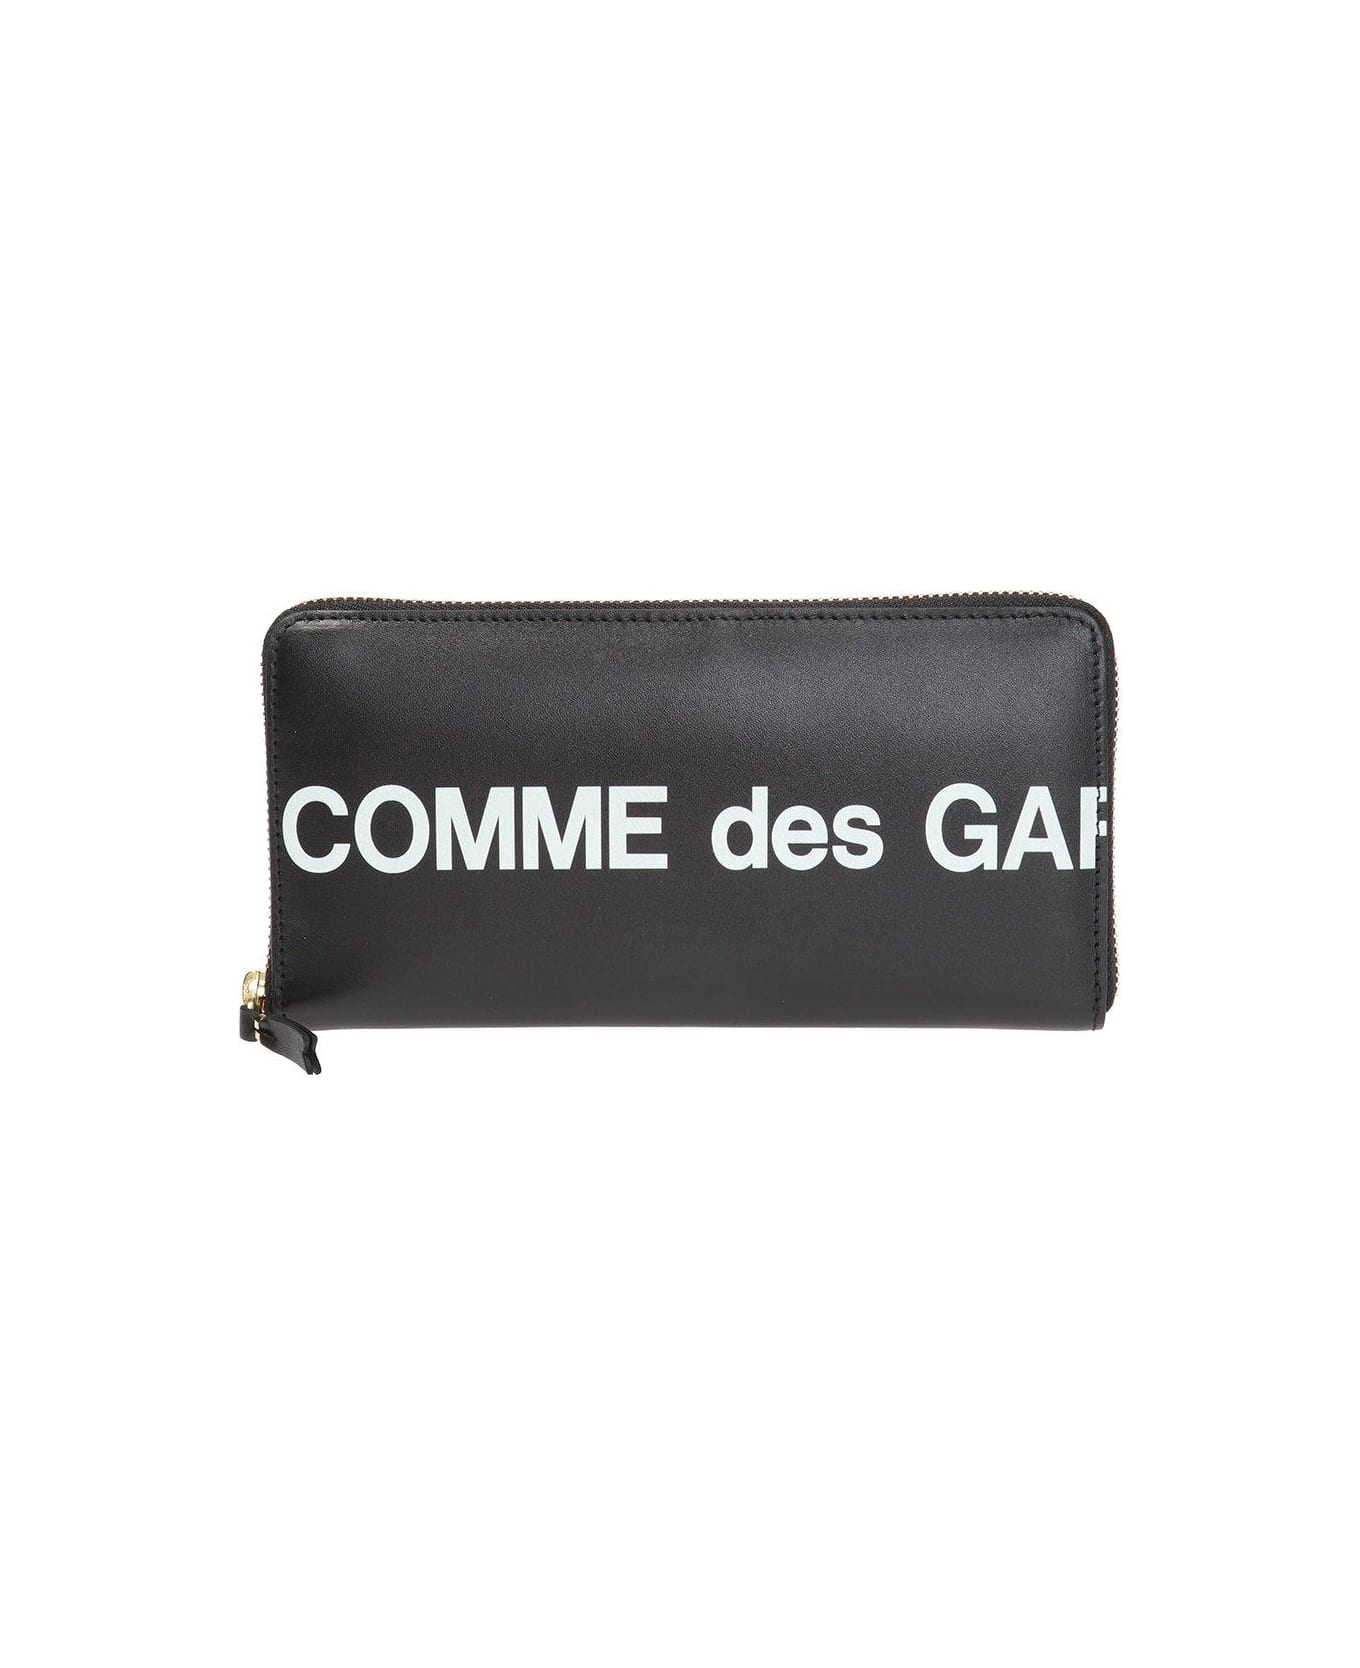 Comme des Garçons Logo Printed Zipped Wallet - . 財布